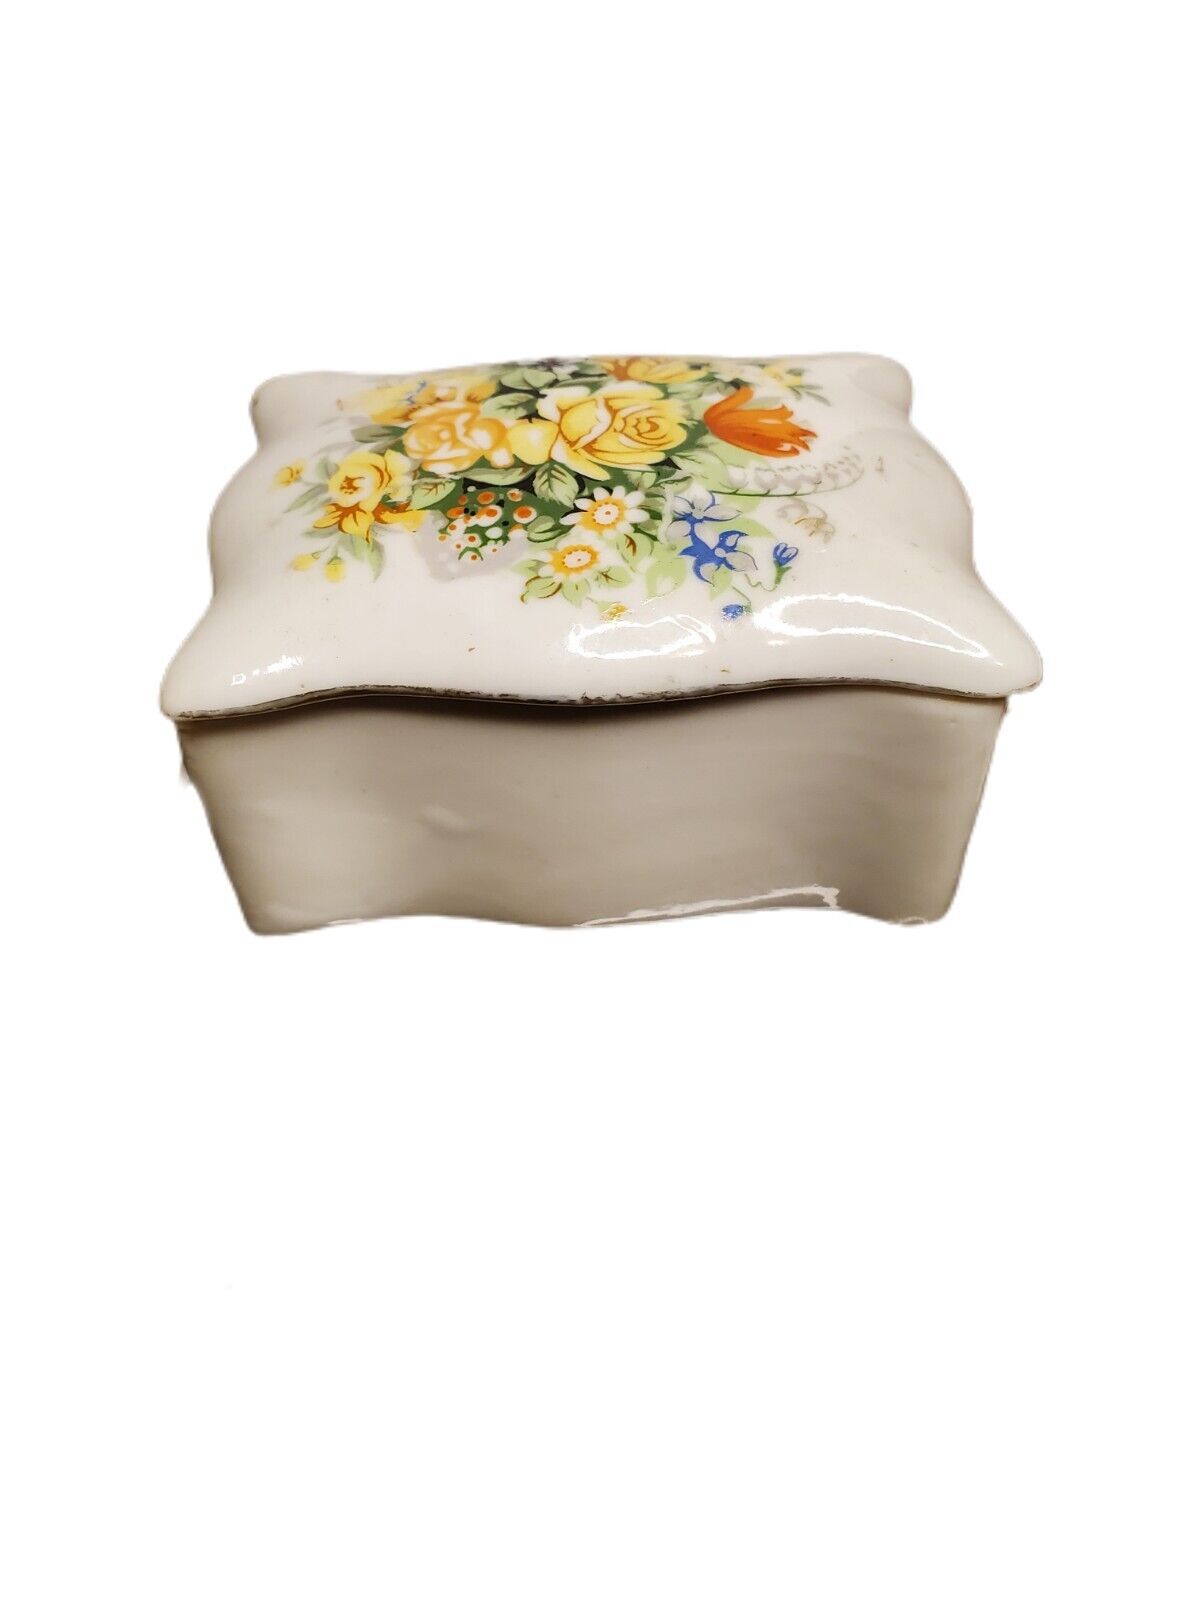 Vintage Porcelain Cabbage Rose Lidded Trinket Box Candy Dish Hand Painted 